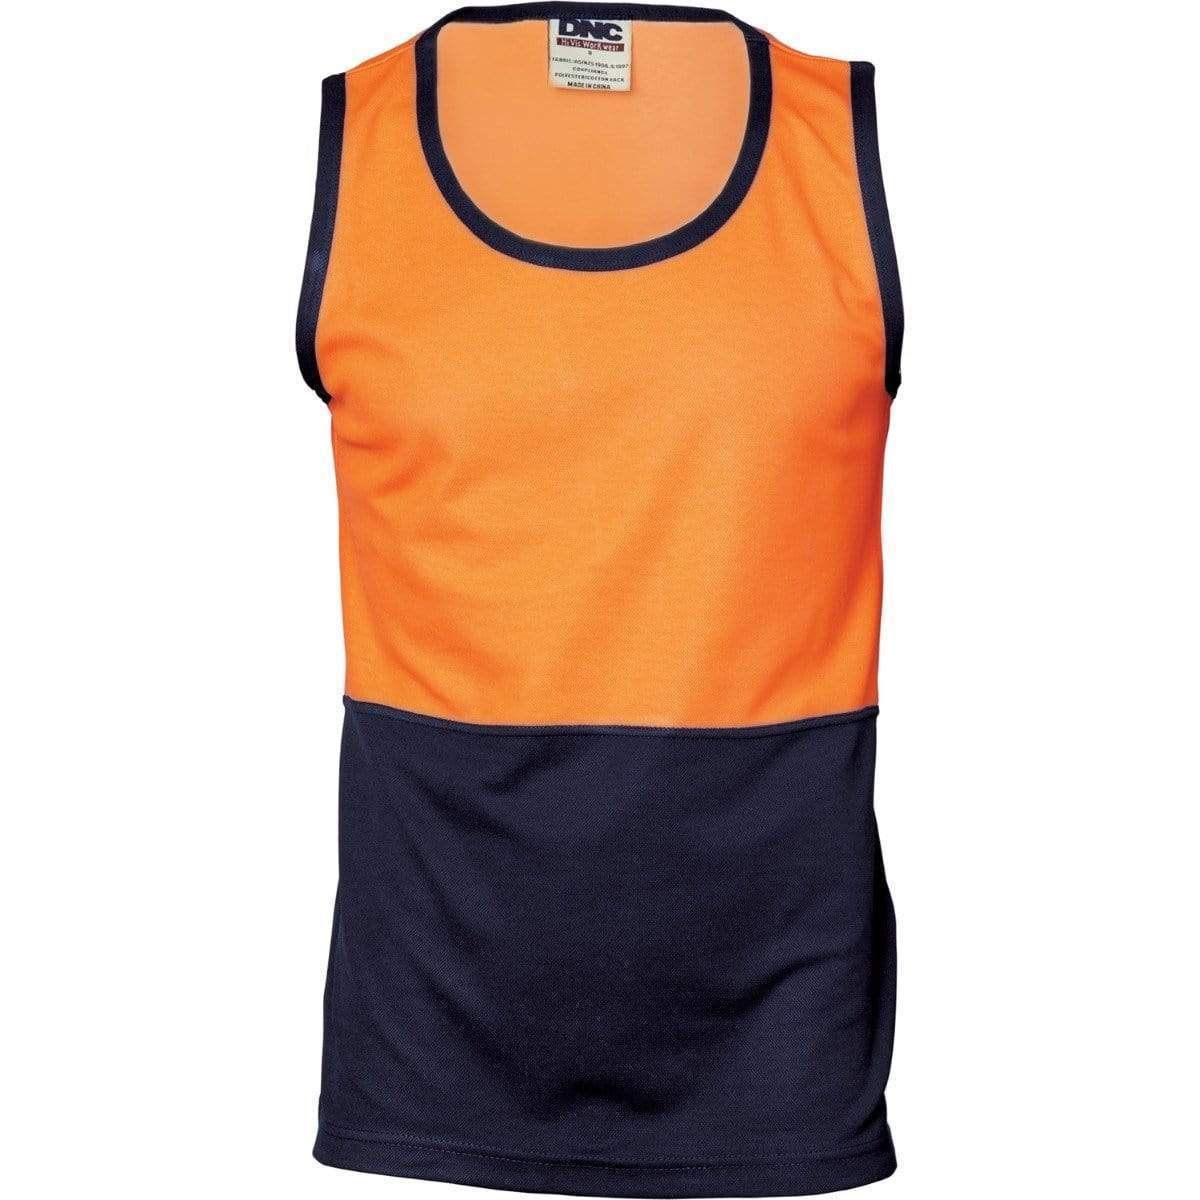 Dnc Workwear Cotton Back Two-tone Singlet -  3841 Work Wear DNC Workwear Orange/Navy XS 